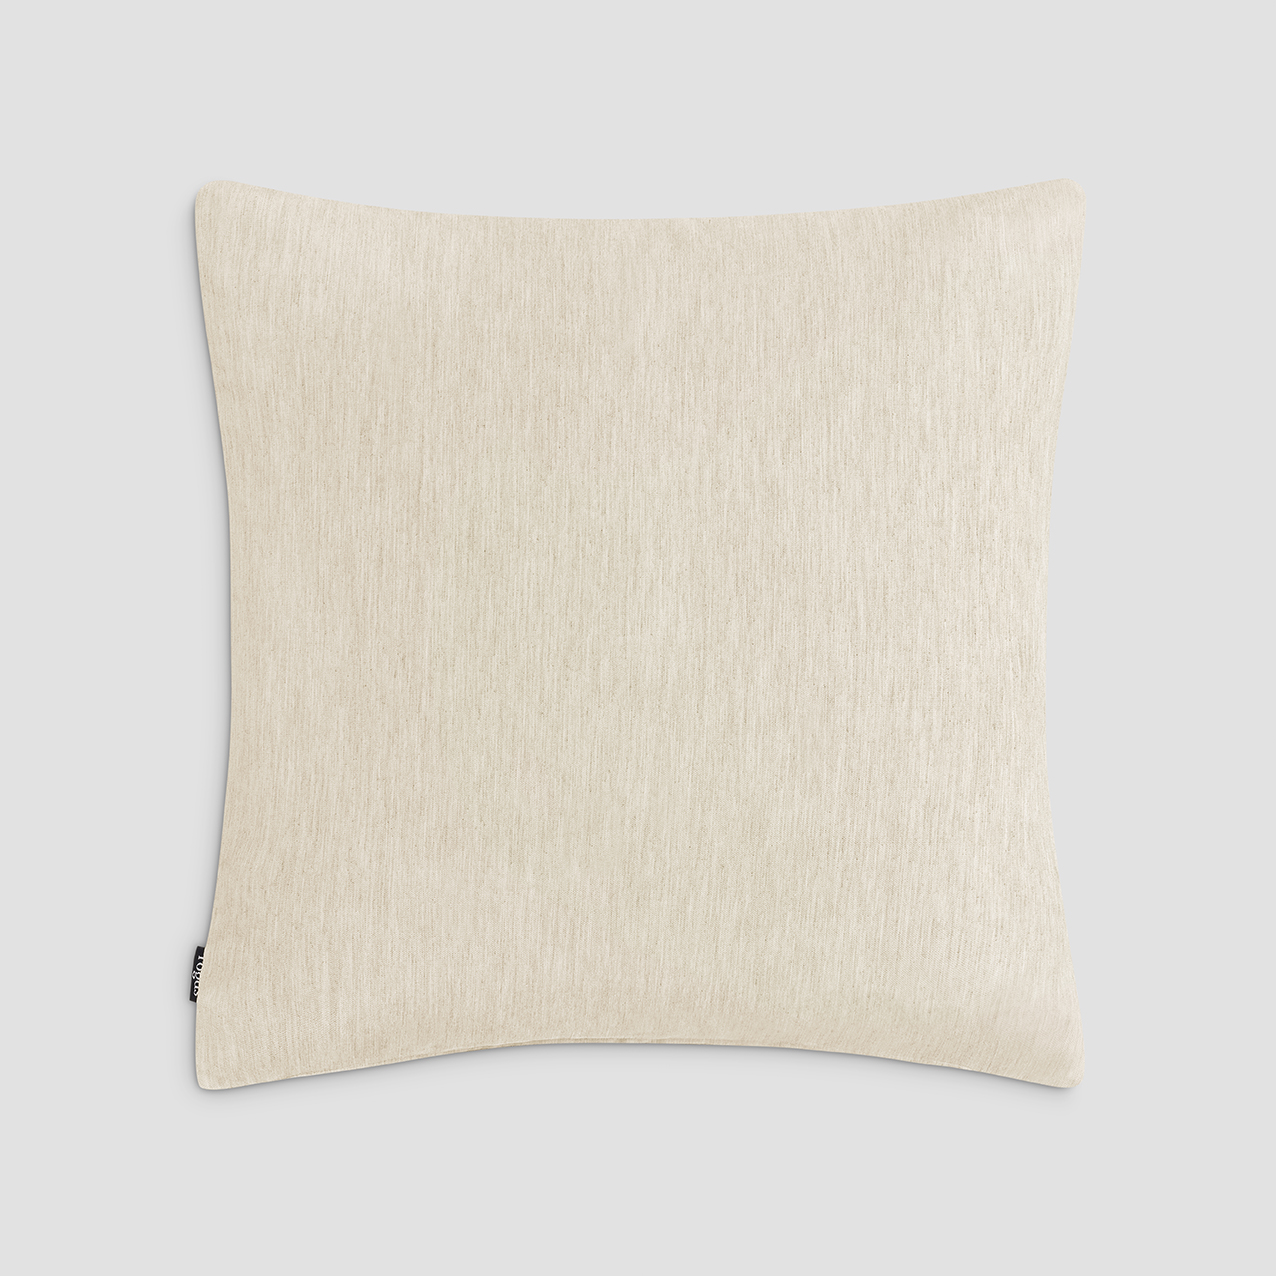 Декоративная подушка Togas Эрсон бежевая 50х50 см, цвет бежевый - фото 2